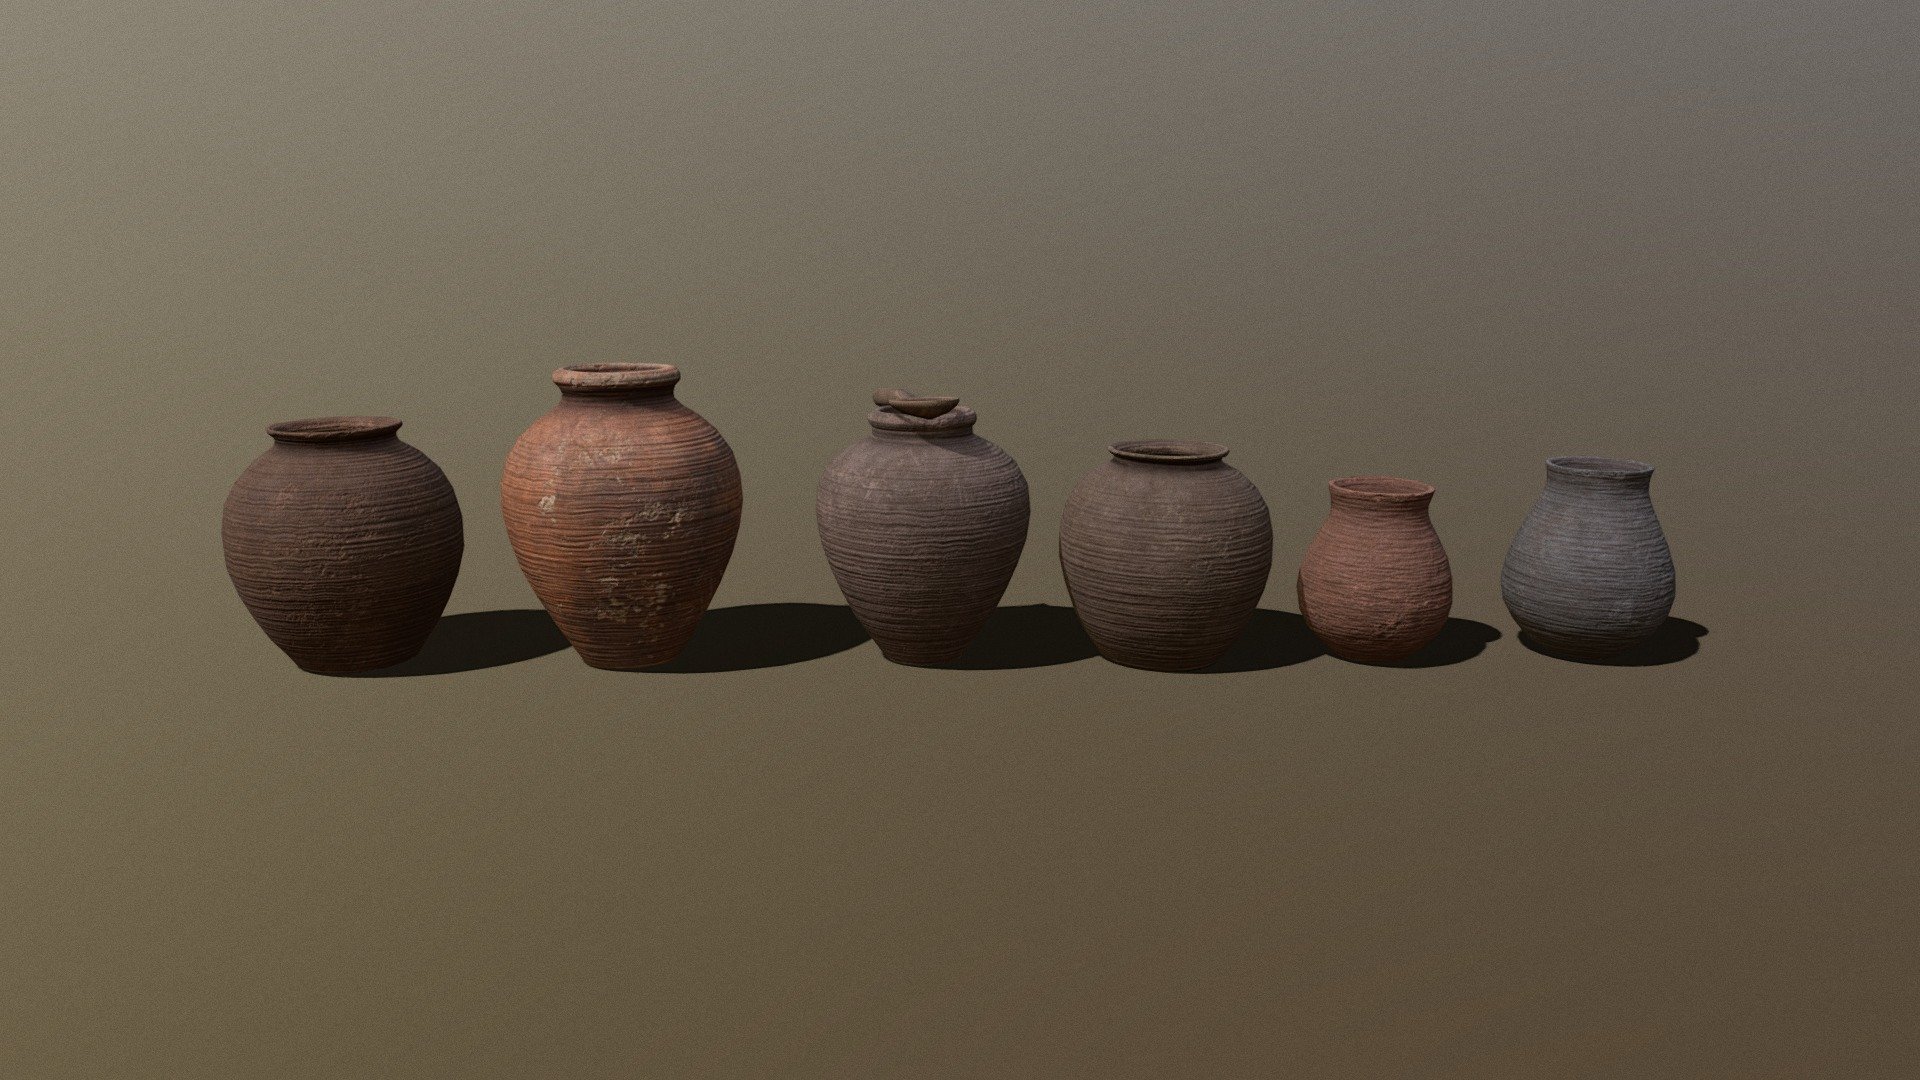 beautiful_pottery_fbx - beautiful_pottery_fbx - Buy Royalty Free 3D model by GetDeadEntertainment 3d model